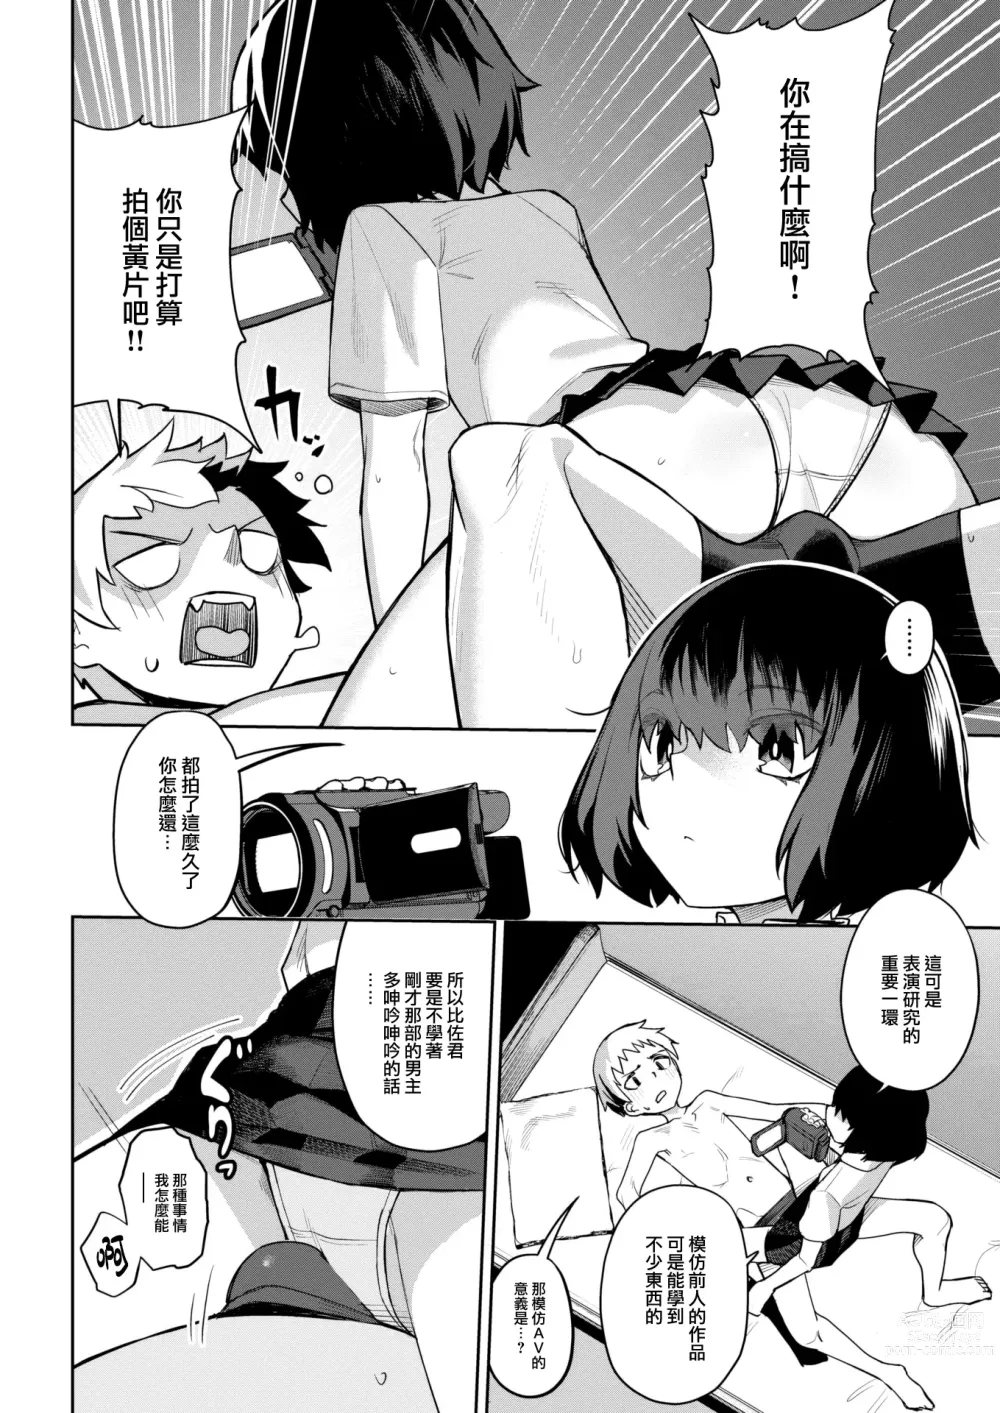 Page 5 of manga Doridorare